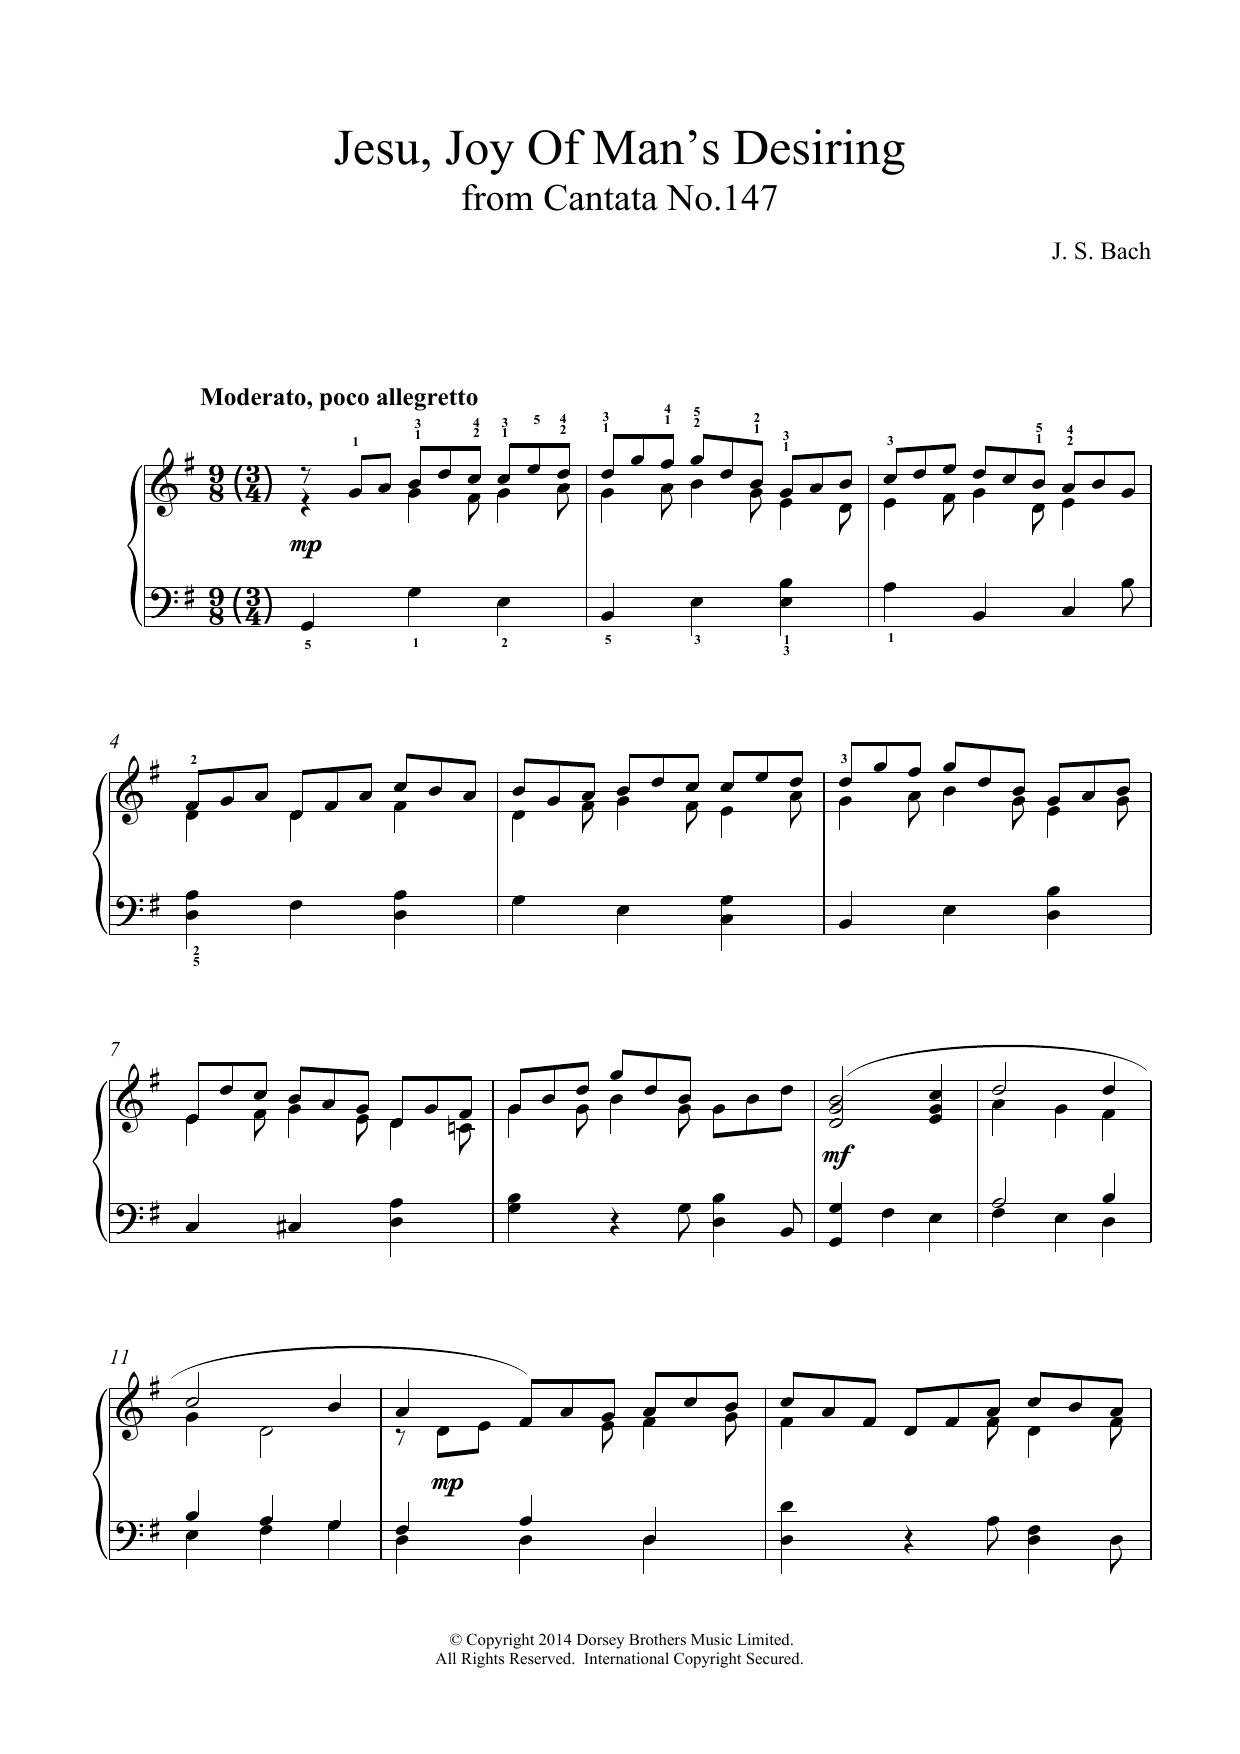 Johann Sebastian Bach Jesu, Joy Of Man's Desiring (from Cantata 147) Sheet Music Notes & Chords for Piano - Download or Print PDF